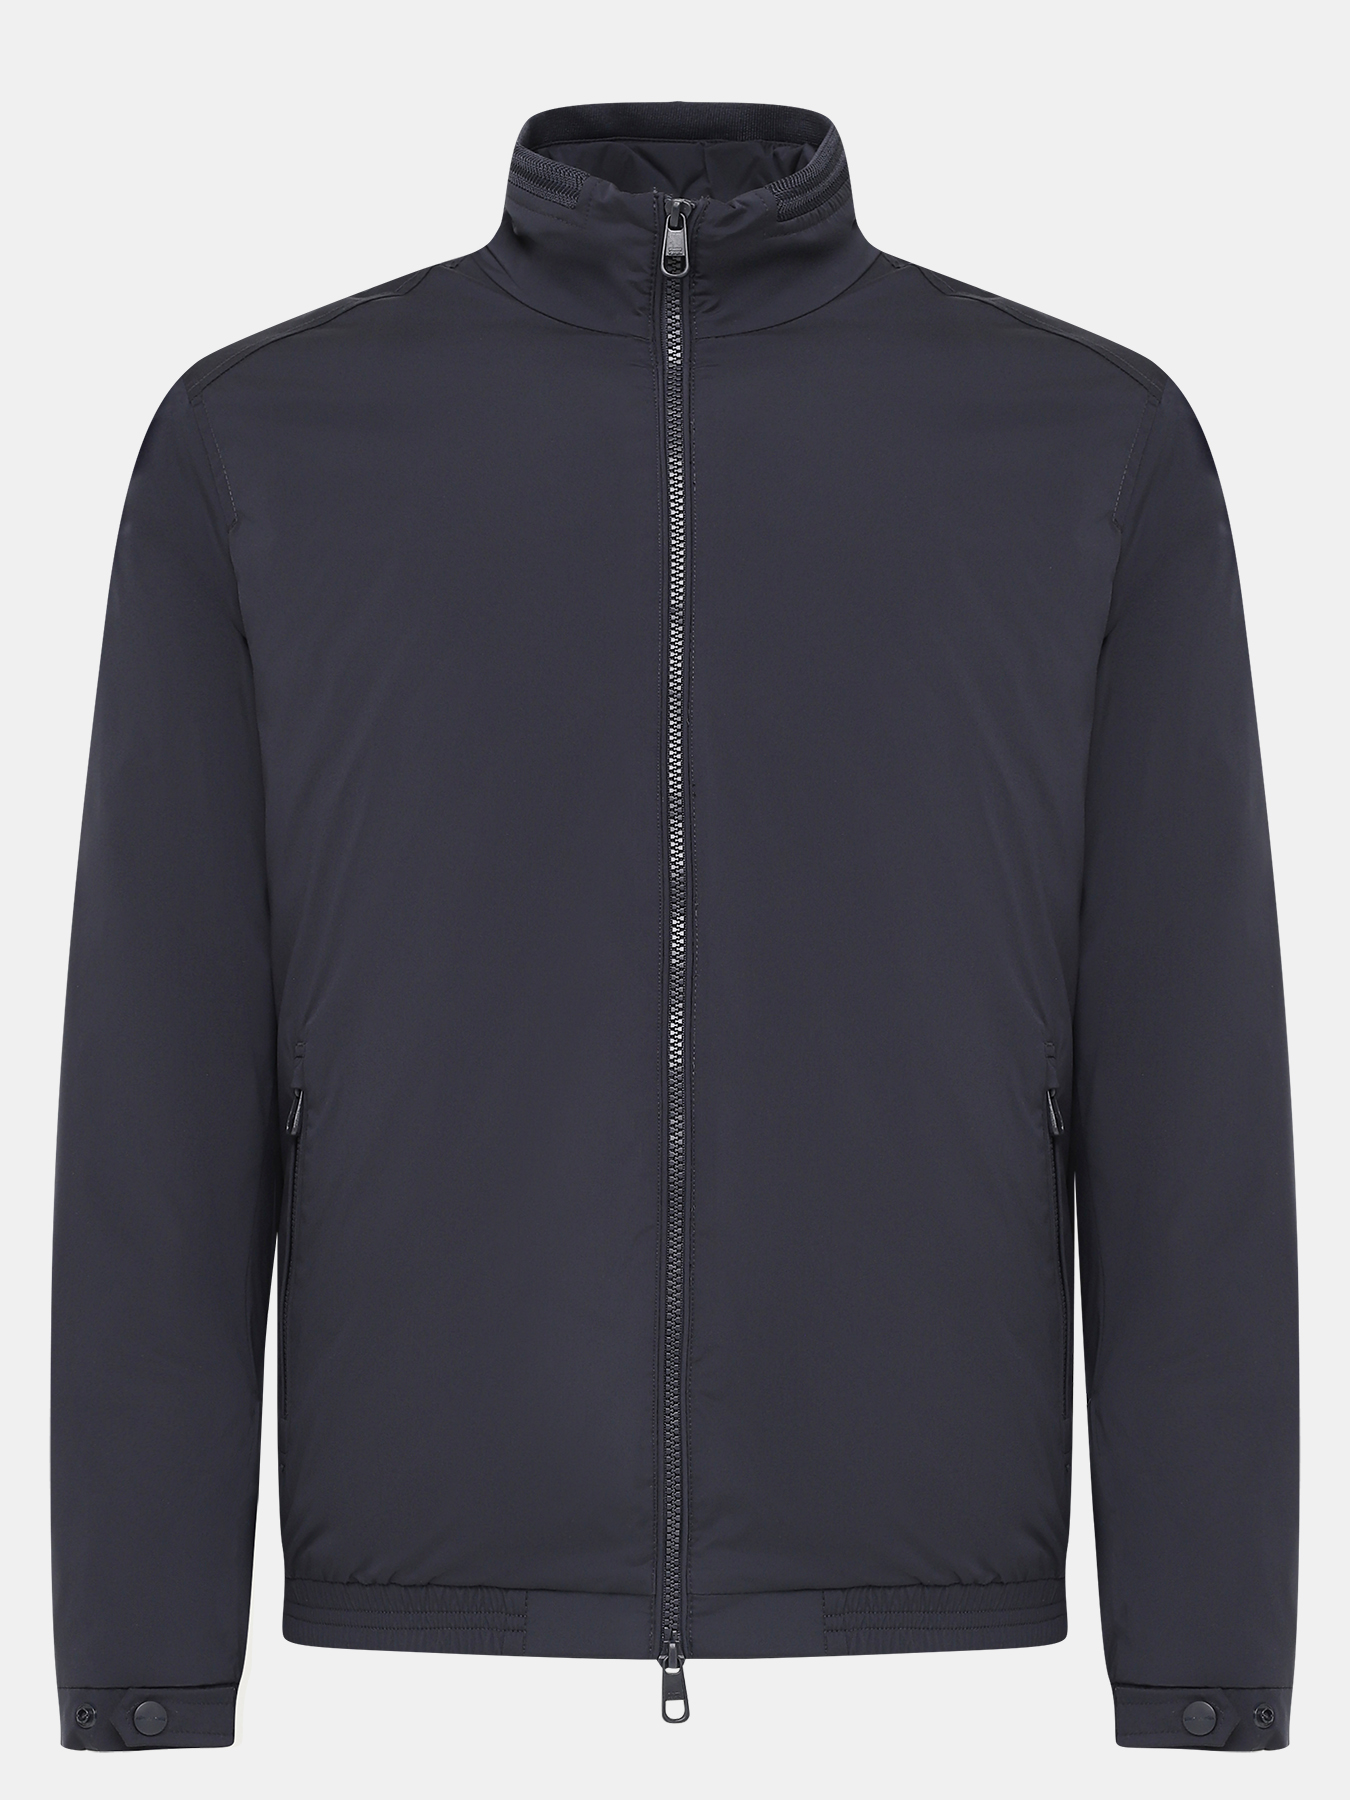 Куртка Pierre Cardin 394133-026, цвет темно-синий, размер 50